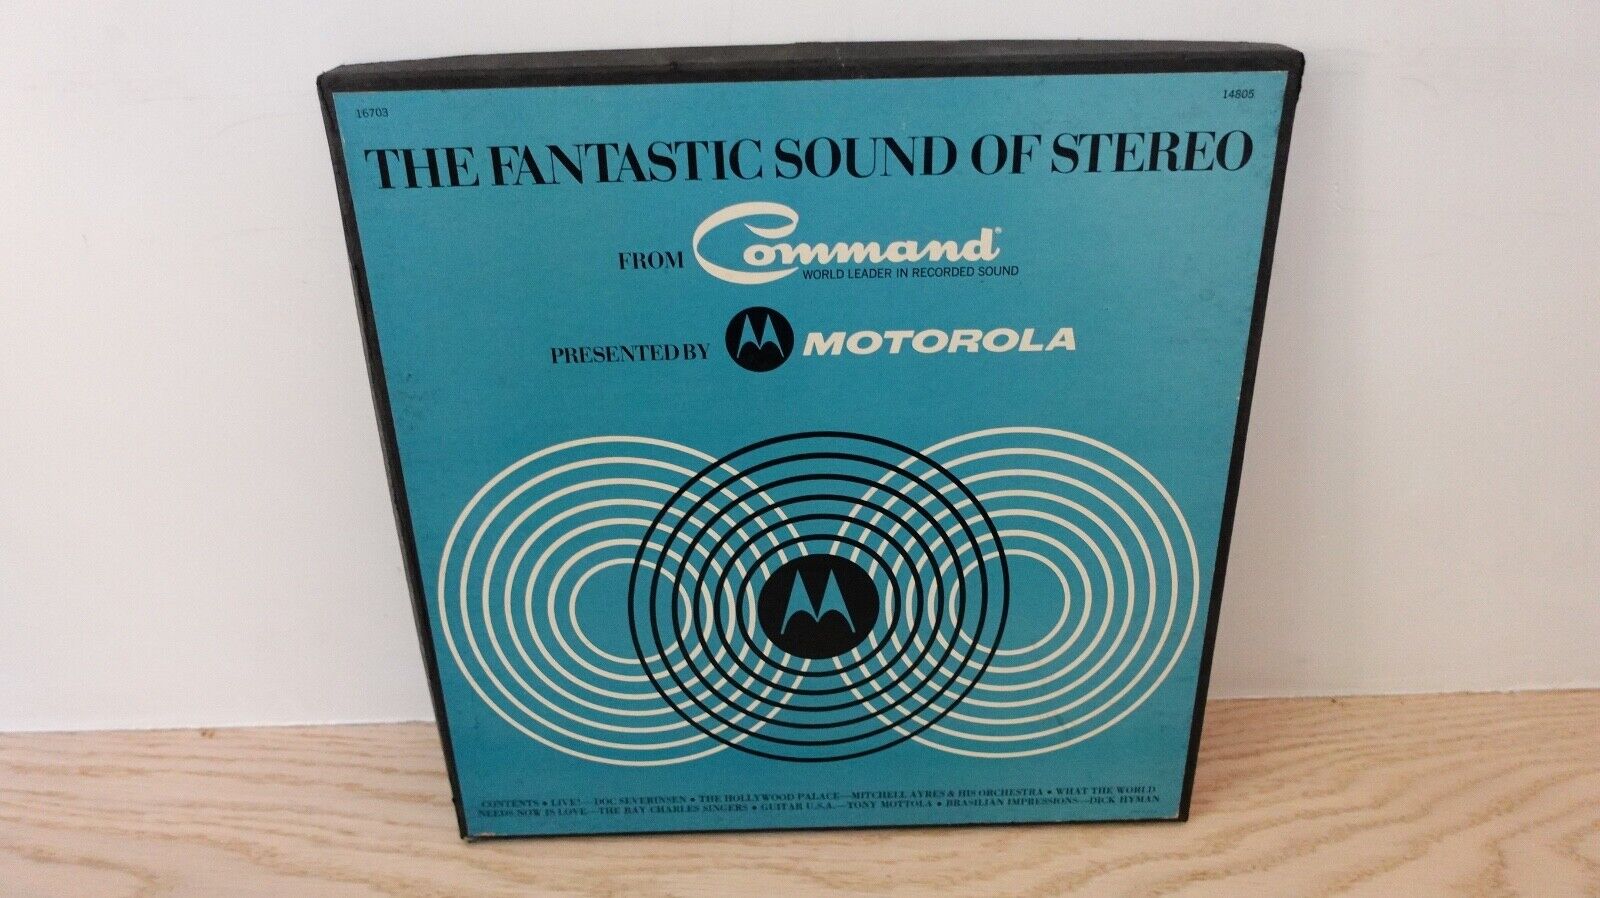 FANTASTIC SOUND OF STEREO COMMAND MOTOROLA FIVE LP RECORD ALBUMS RARE BOX